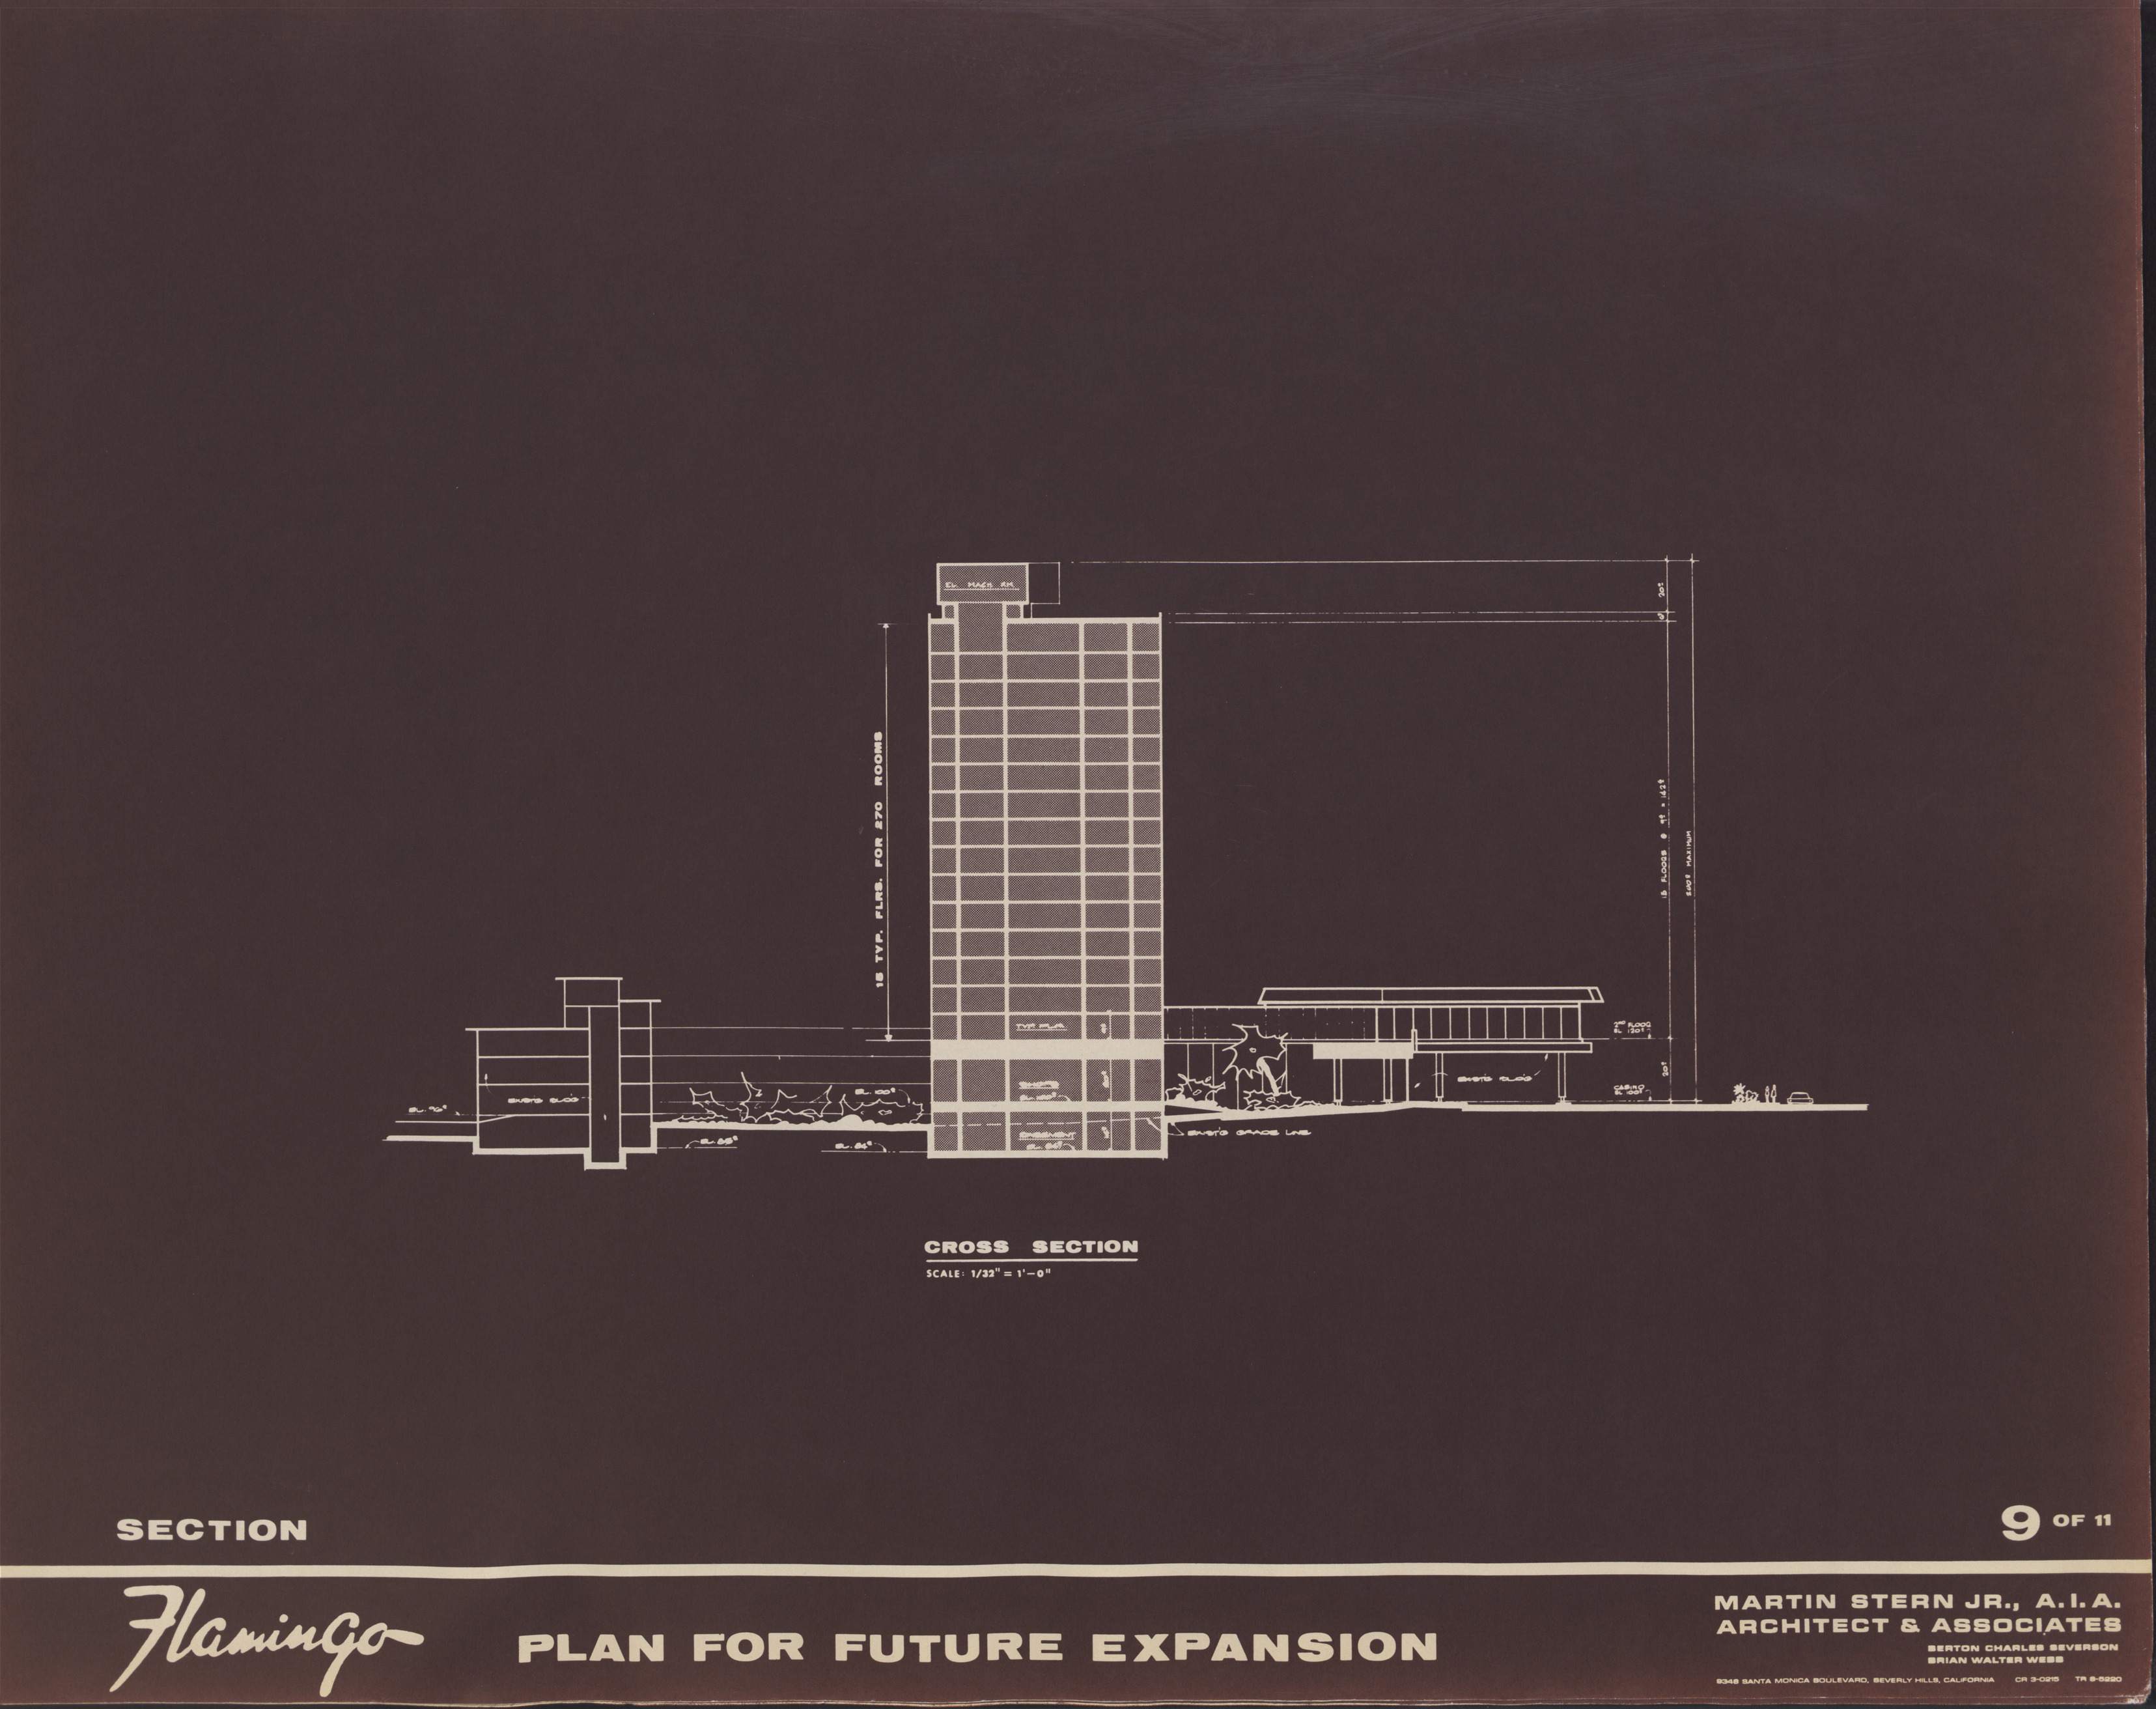 Flamingo Plan for Future Expansion Proposal, image 9